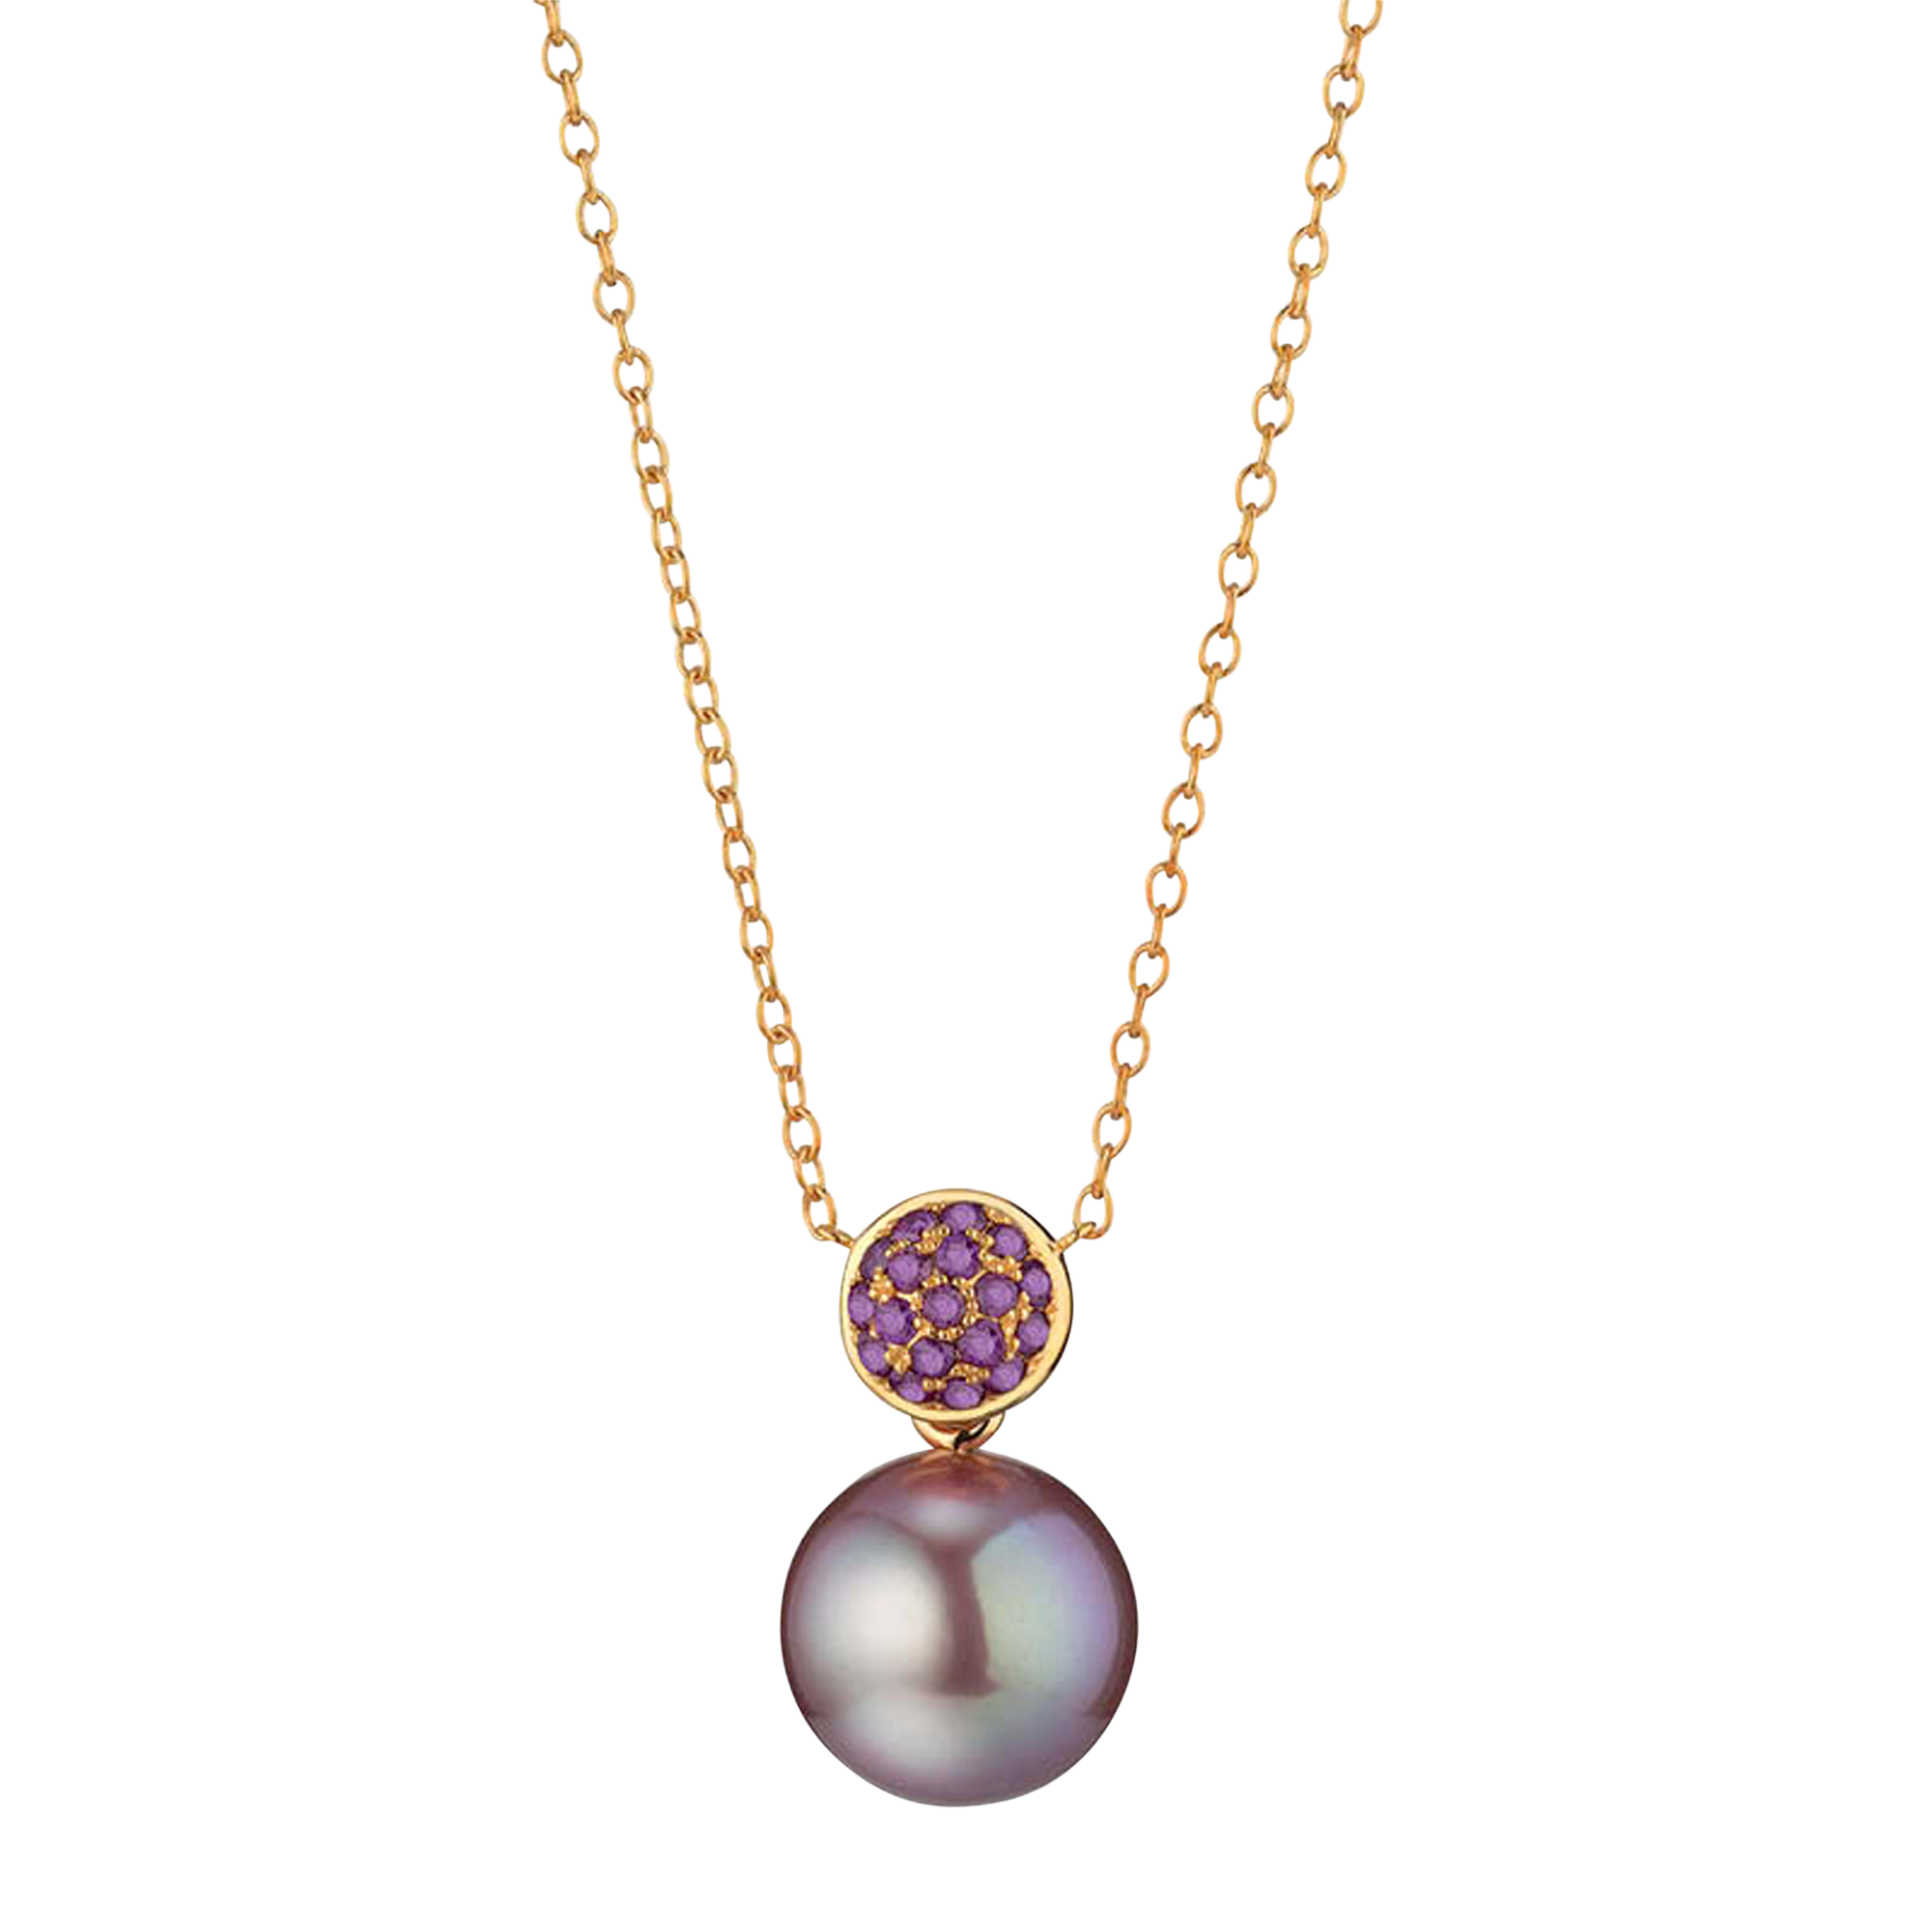 Gellner Modern Classic Essentials necklace with pendant